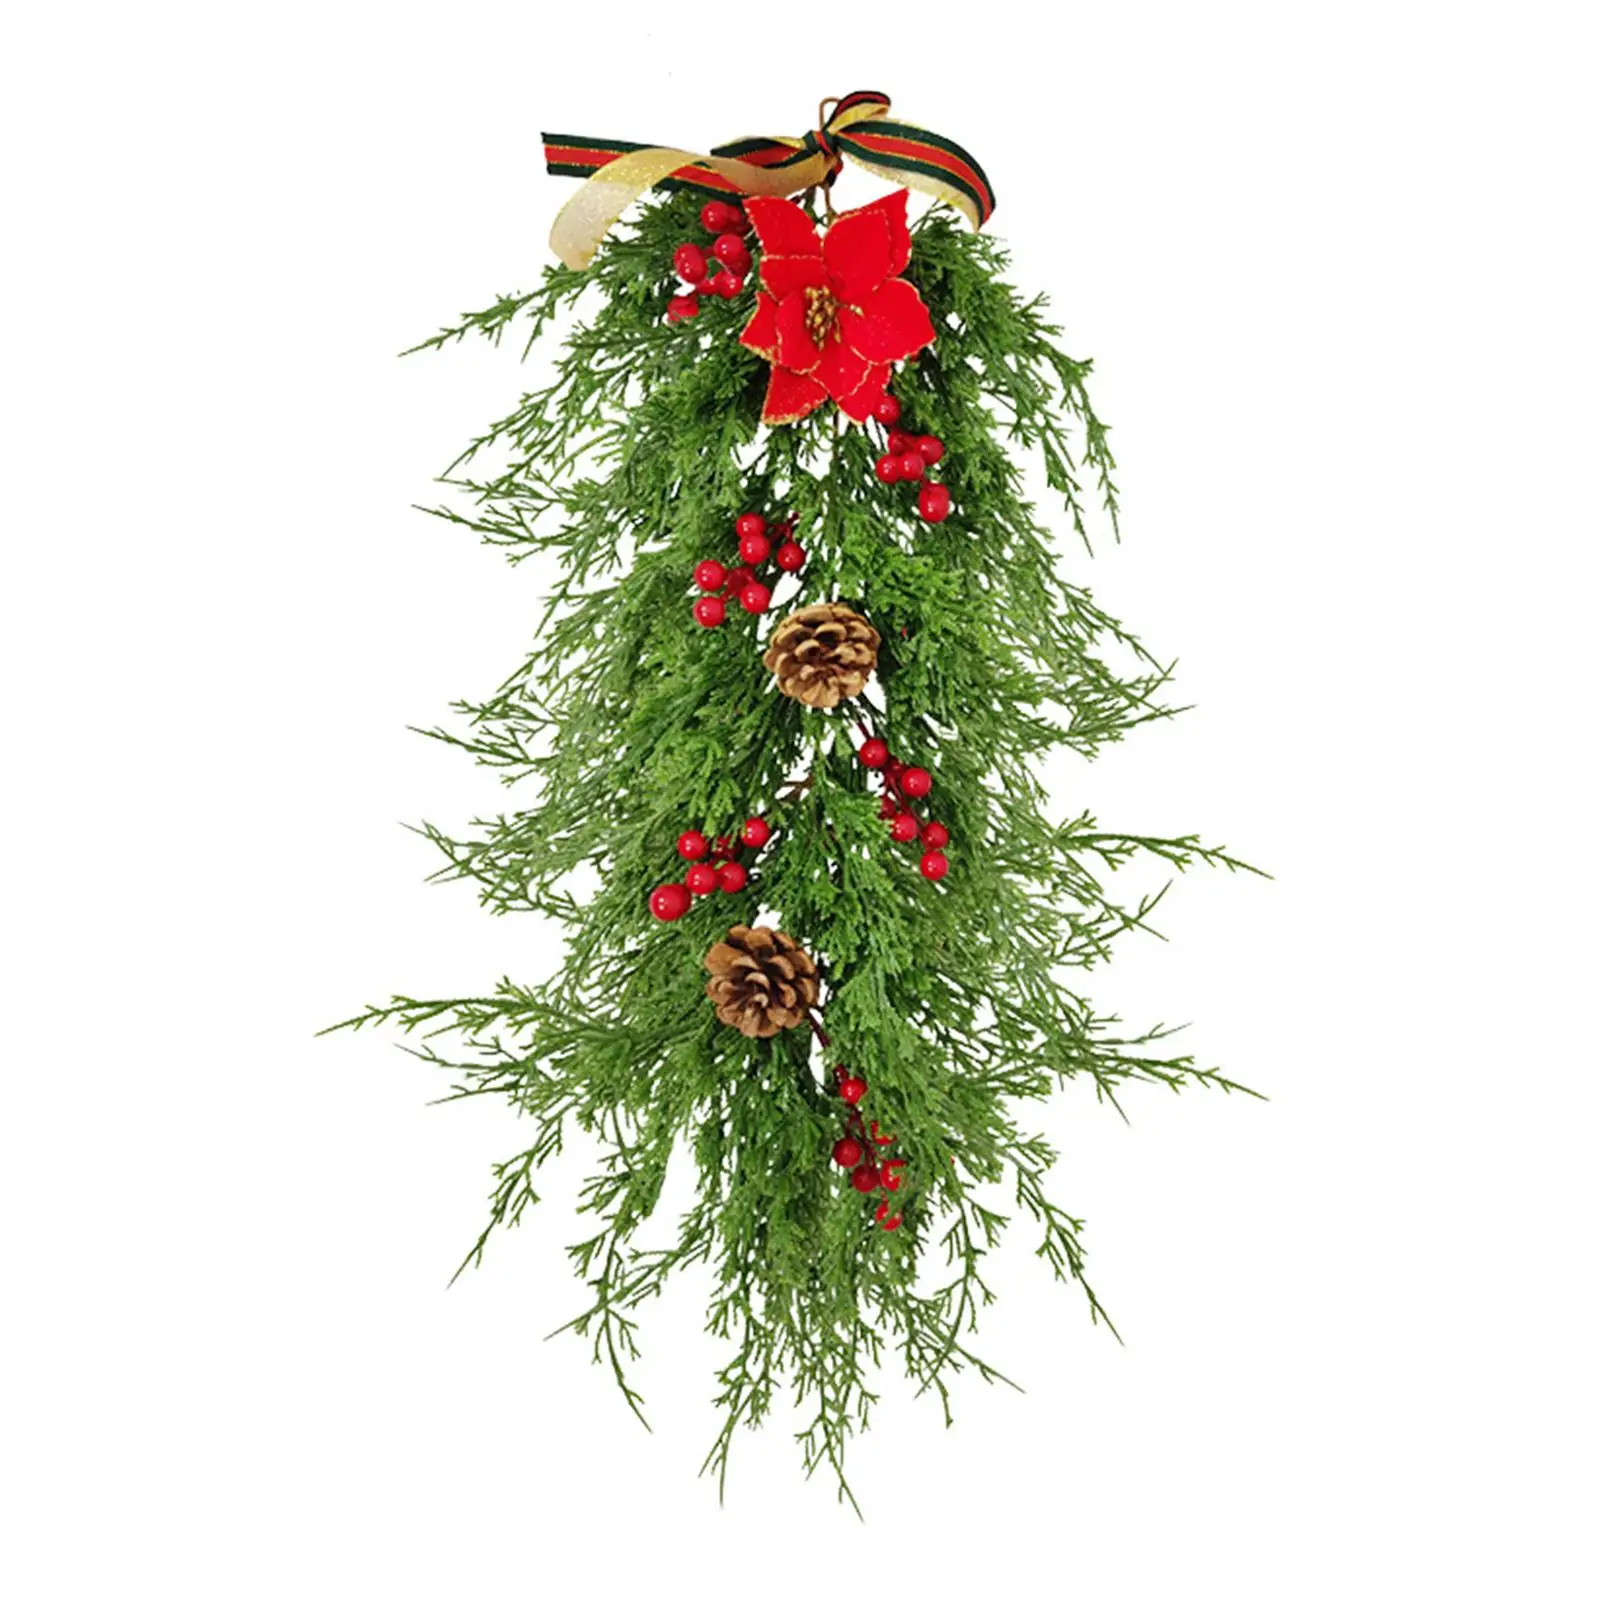 Artificial Decorative Christmas Teardrop Wreath Wall Door Hanging for Party Xmas